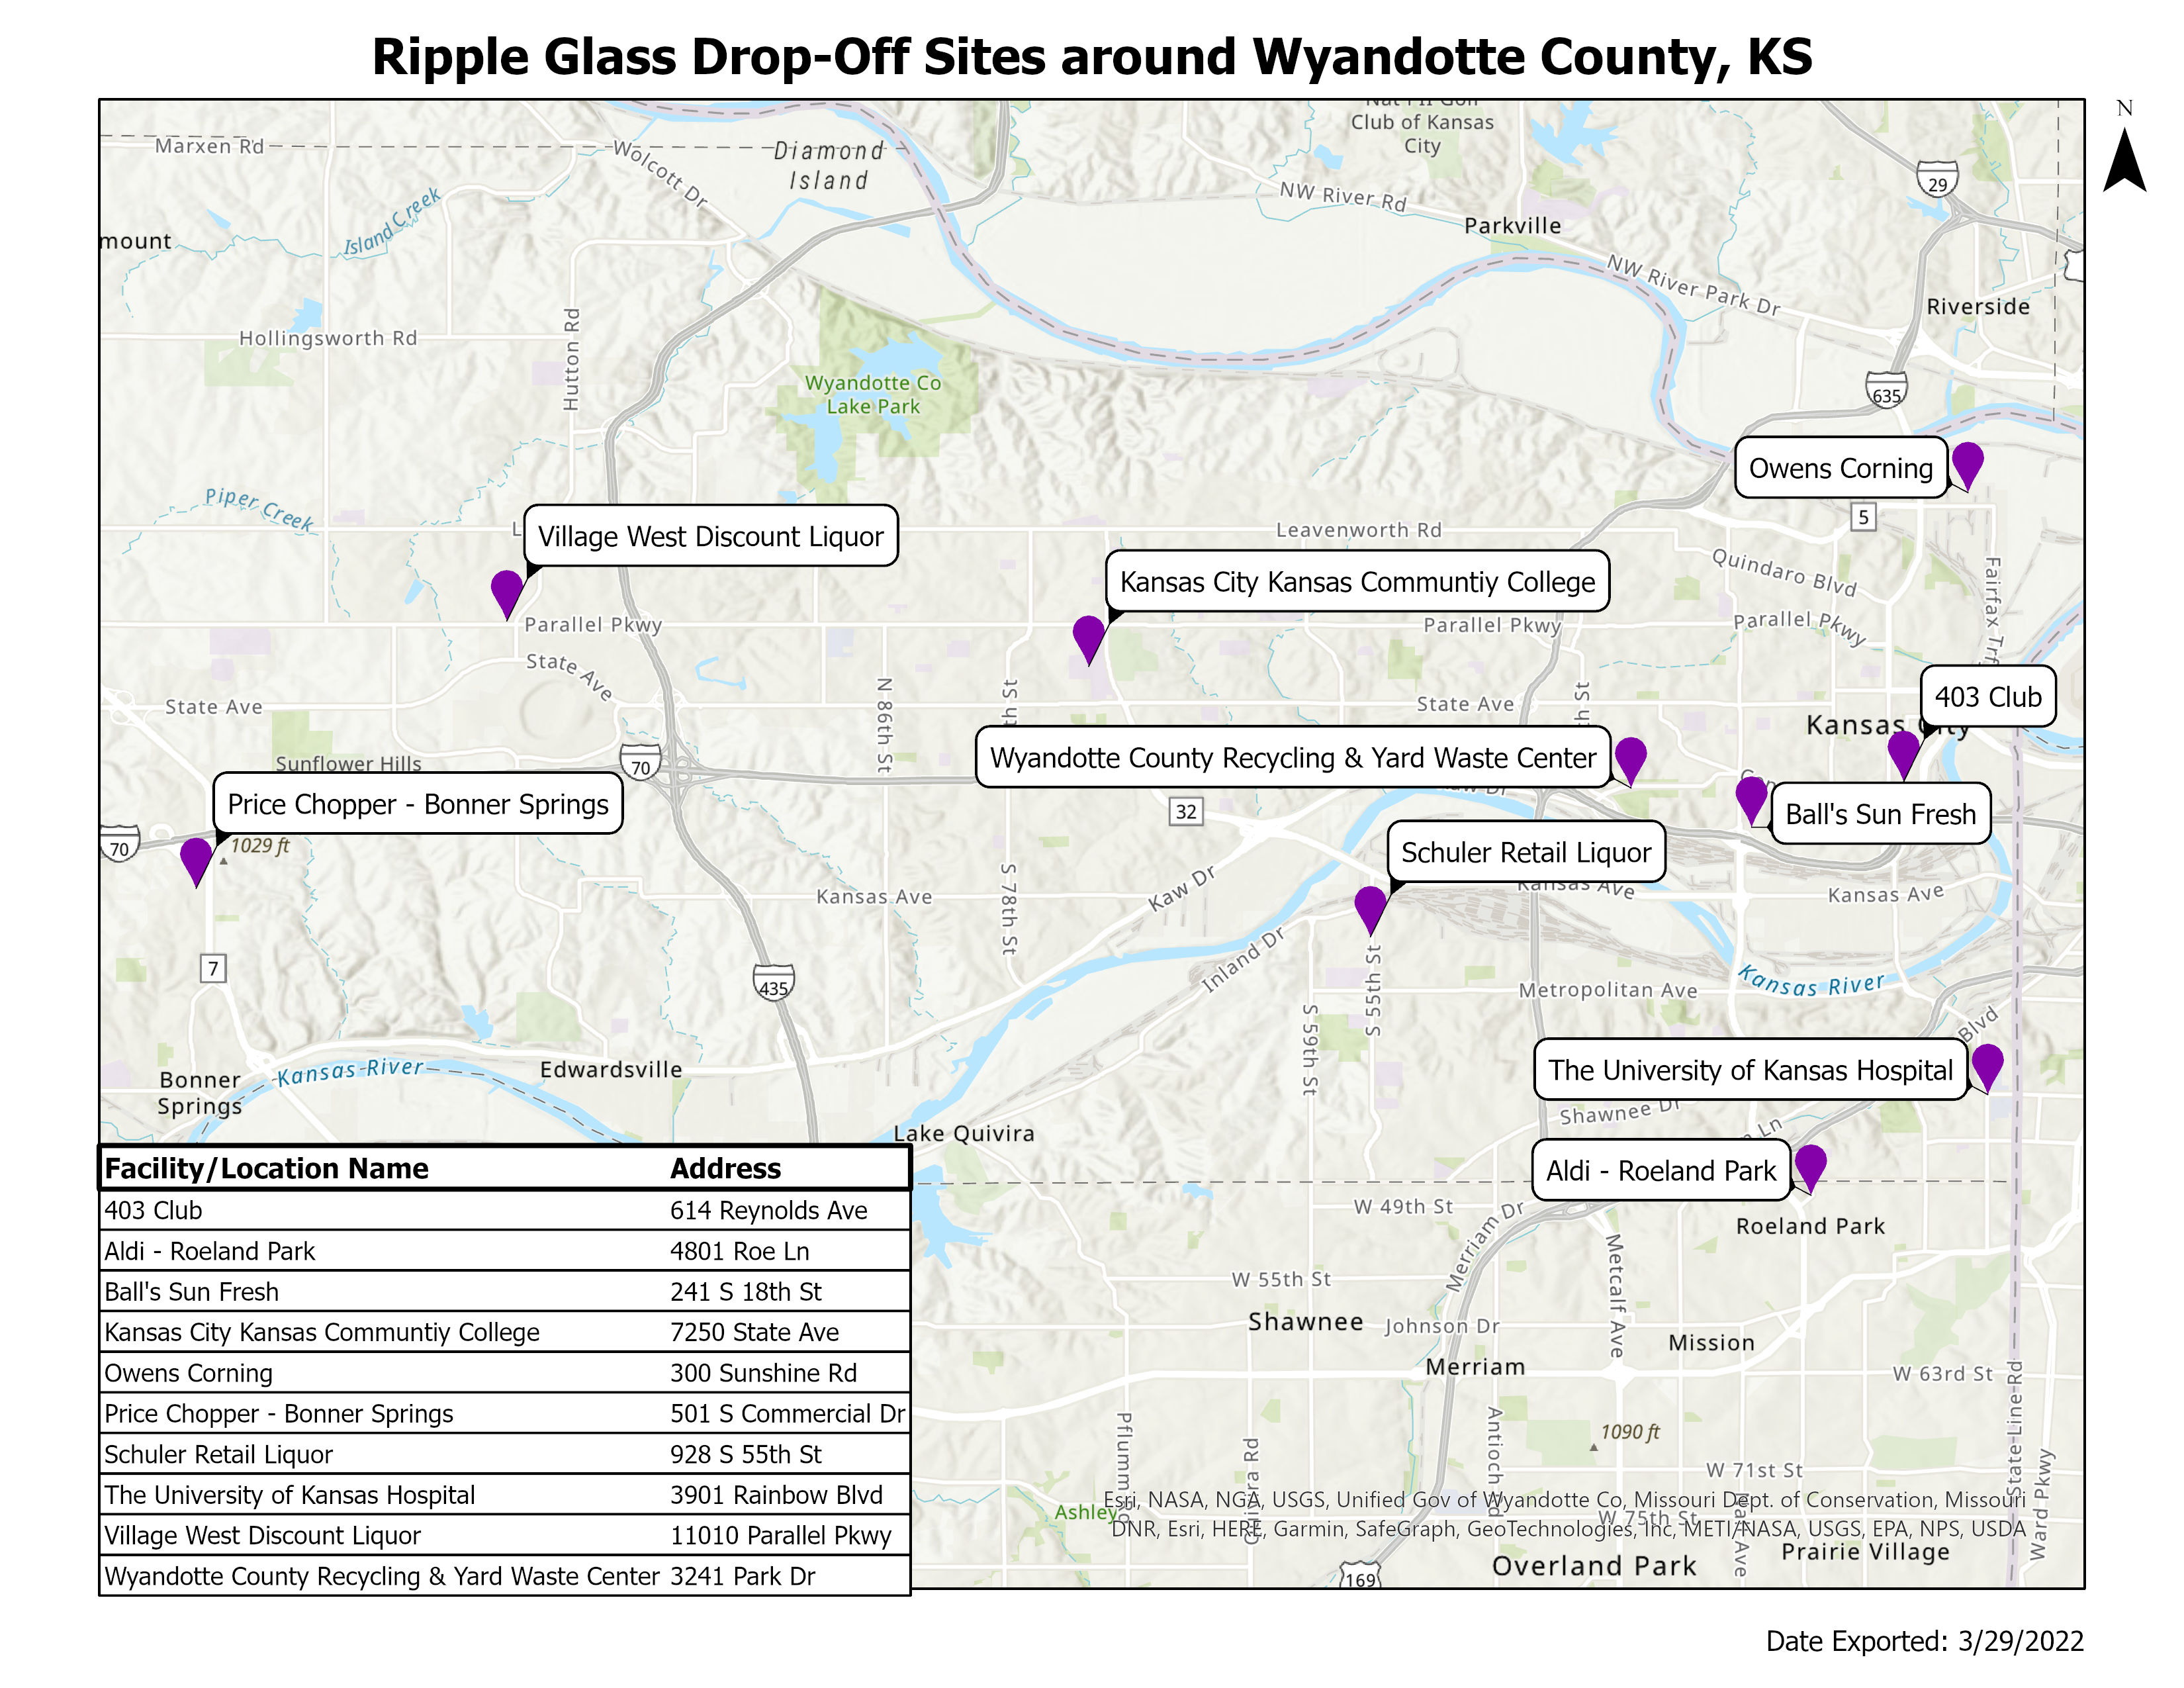 Ripple Glass Recycling Locations around Wyandotte County, KS.jpg